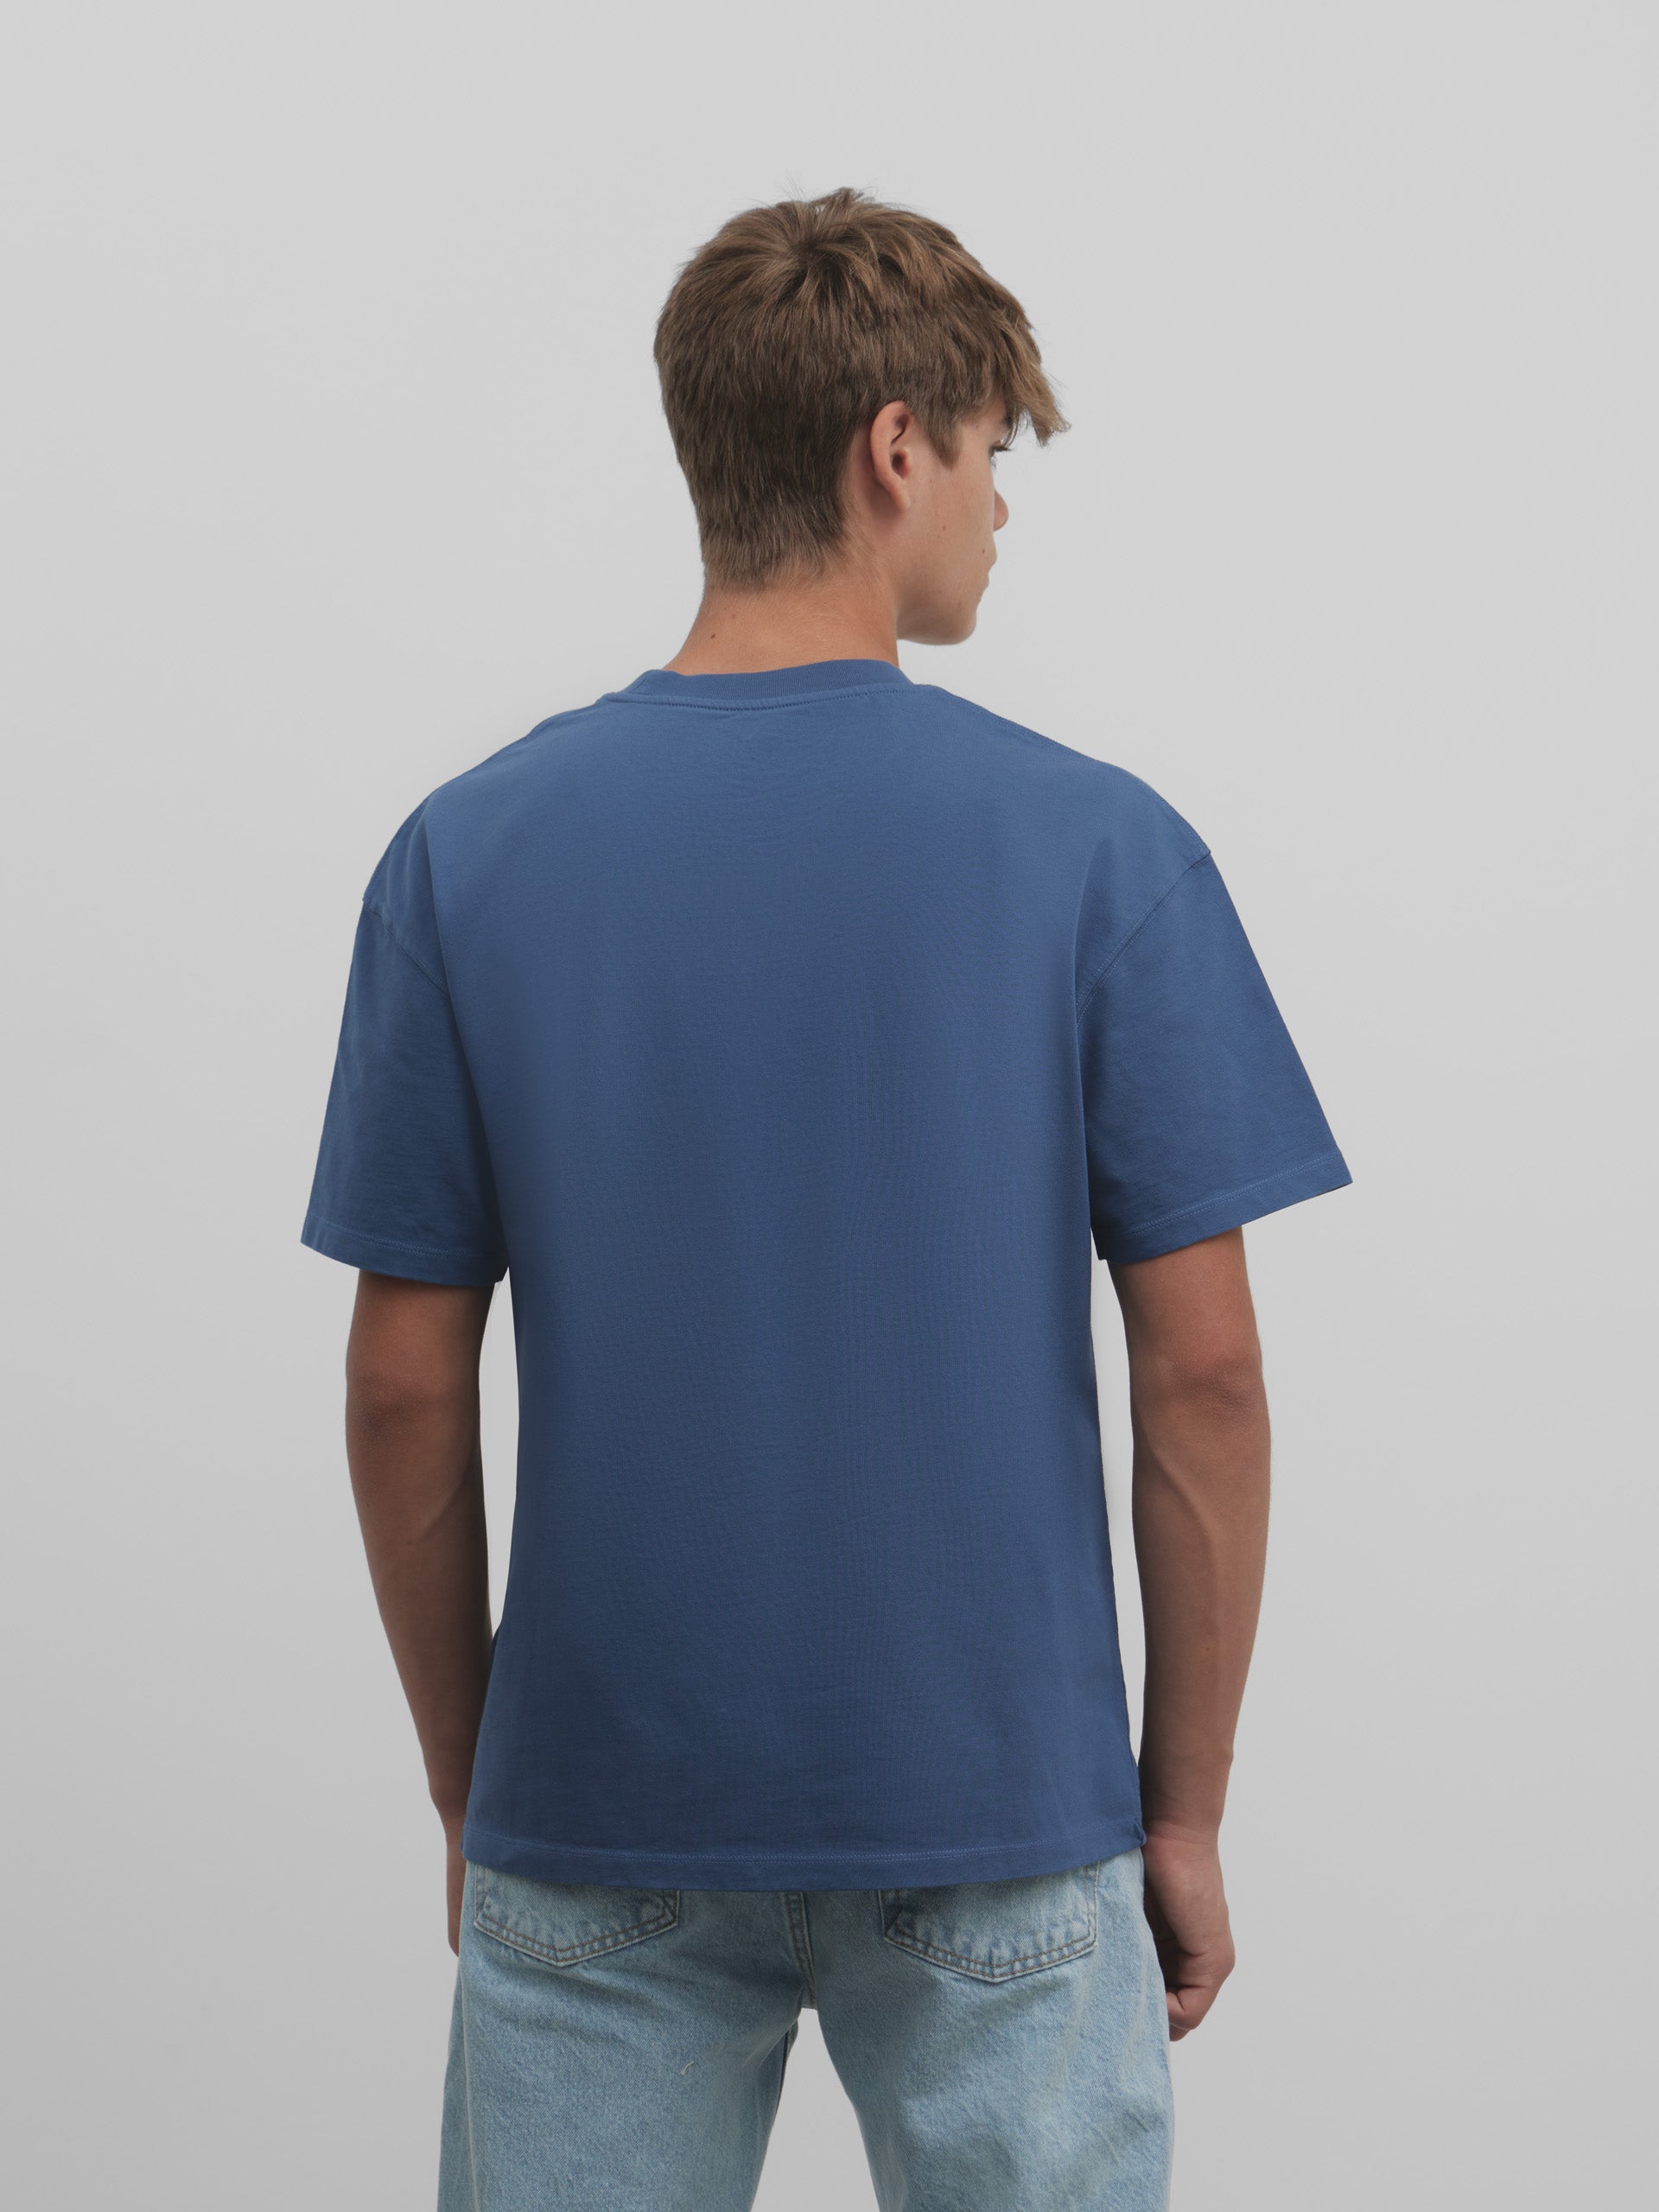 Silbon special fit blue t-shirt